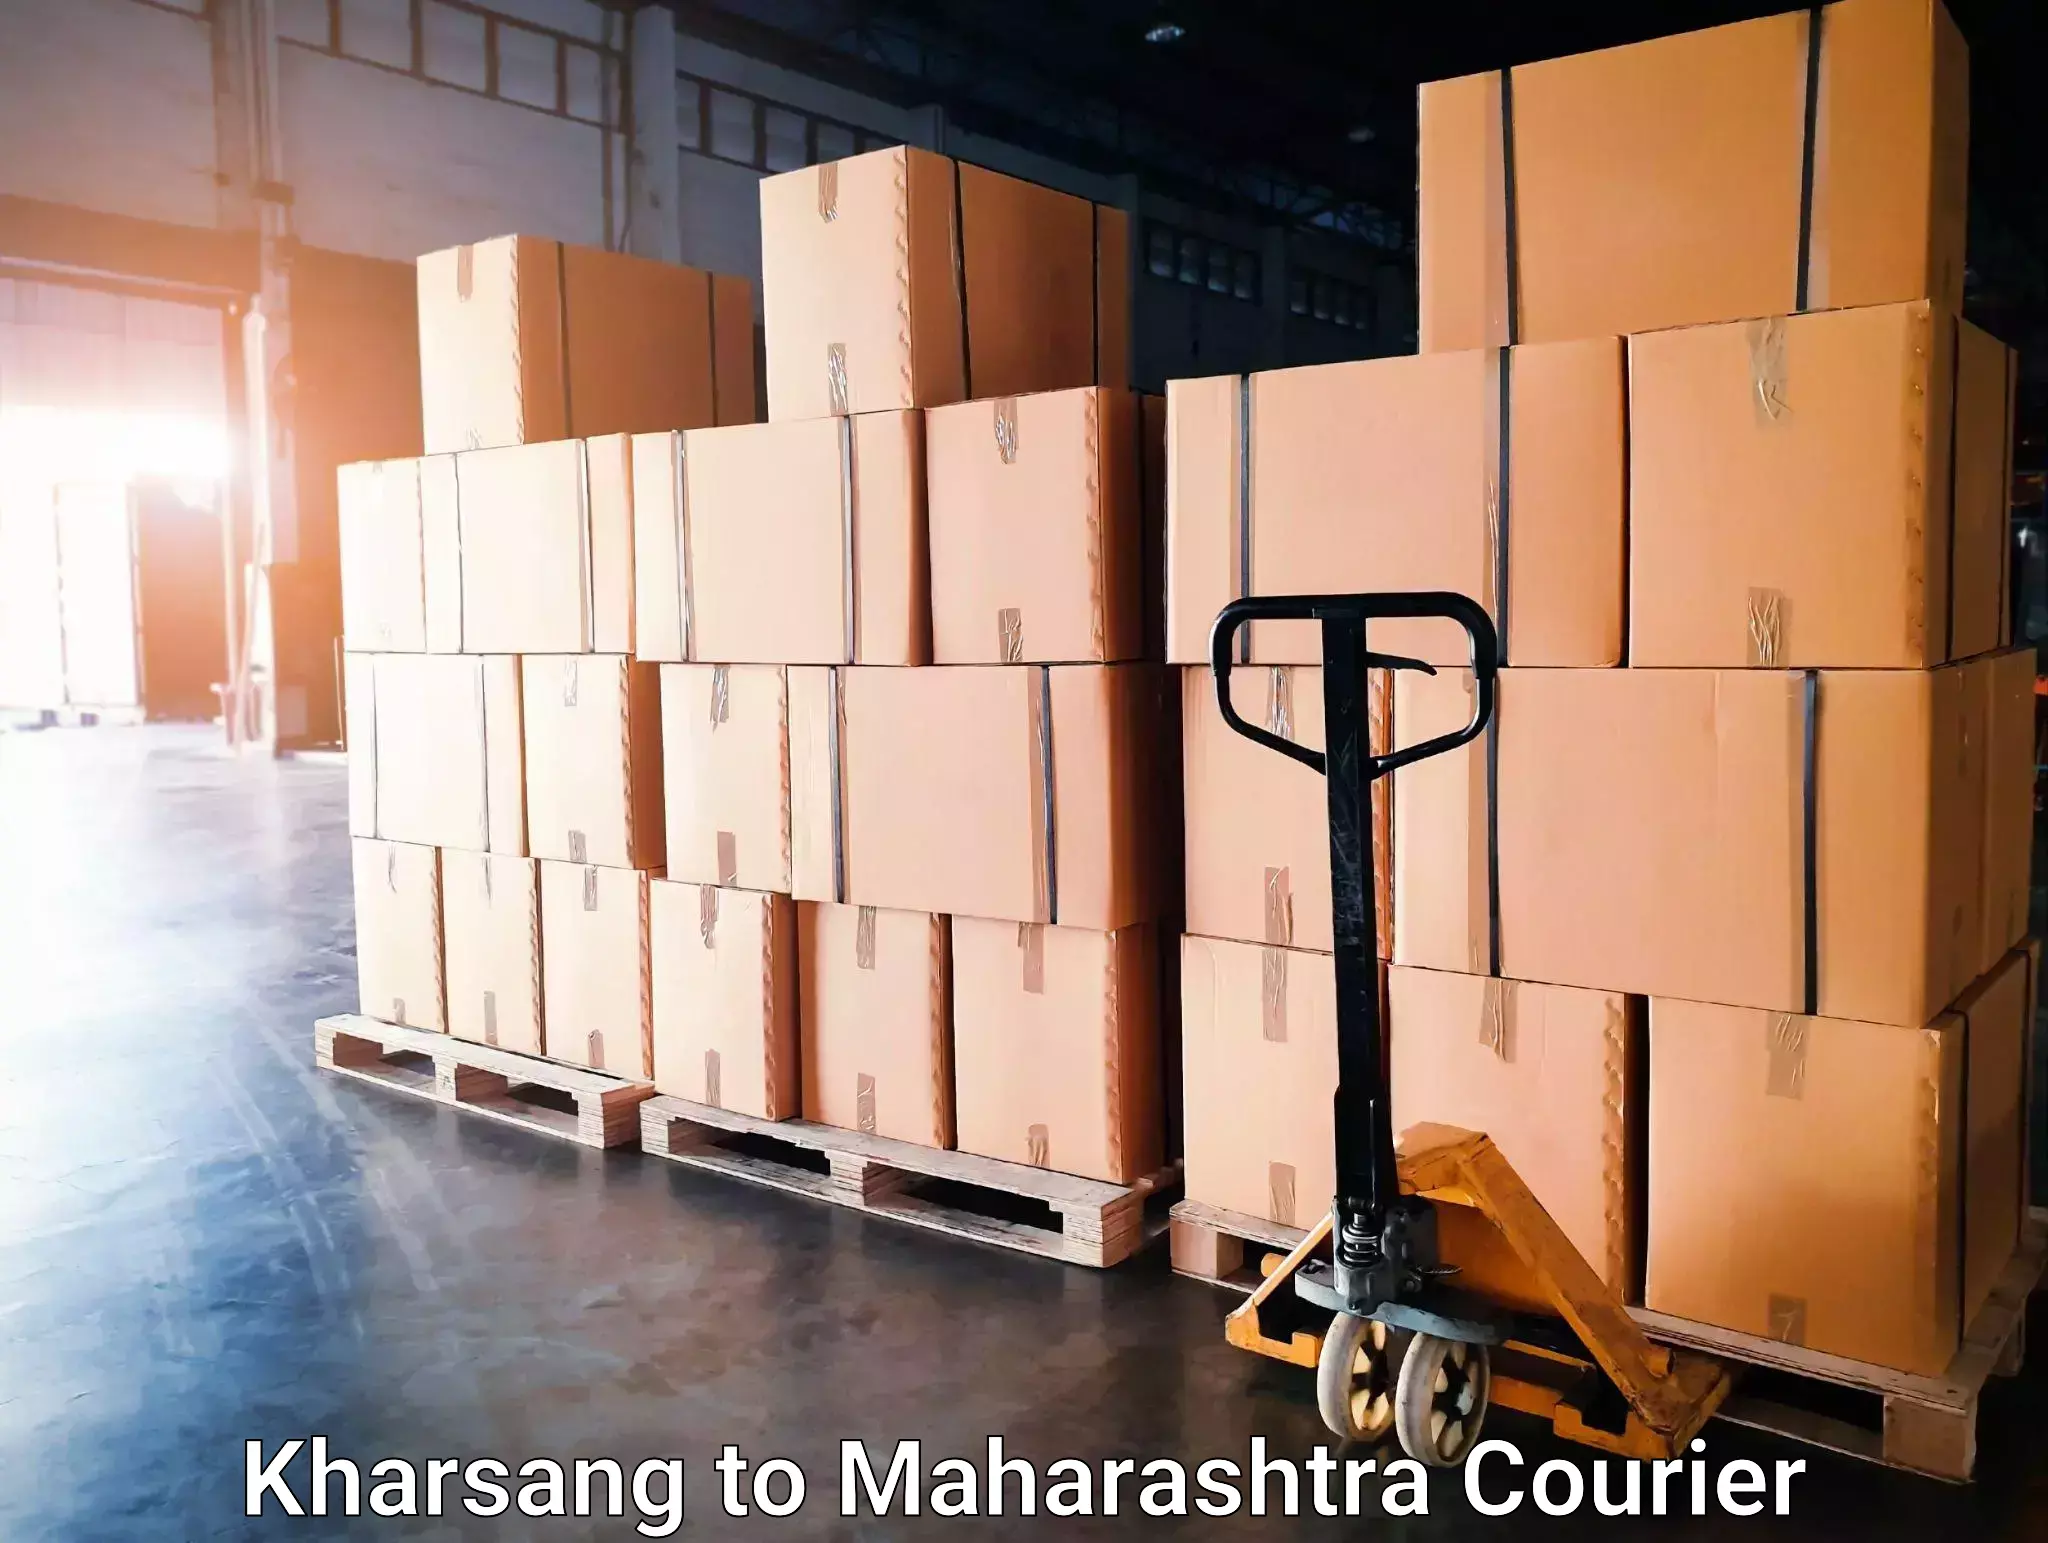 Efficient order fulfillment Kharsang to Maharashtra